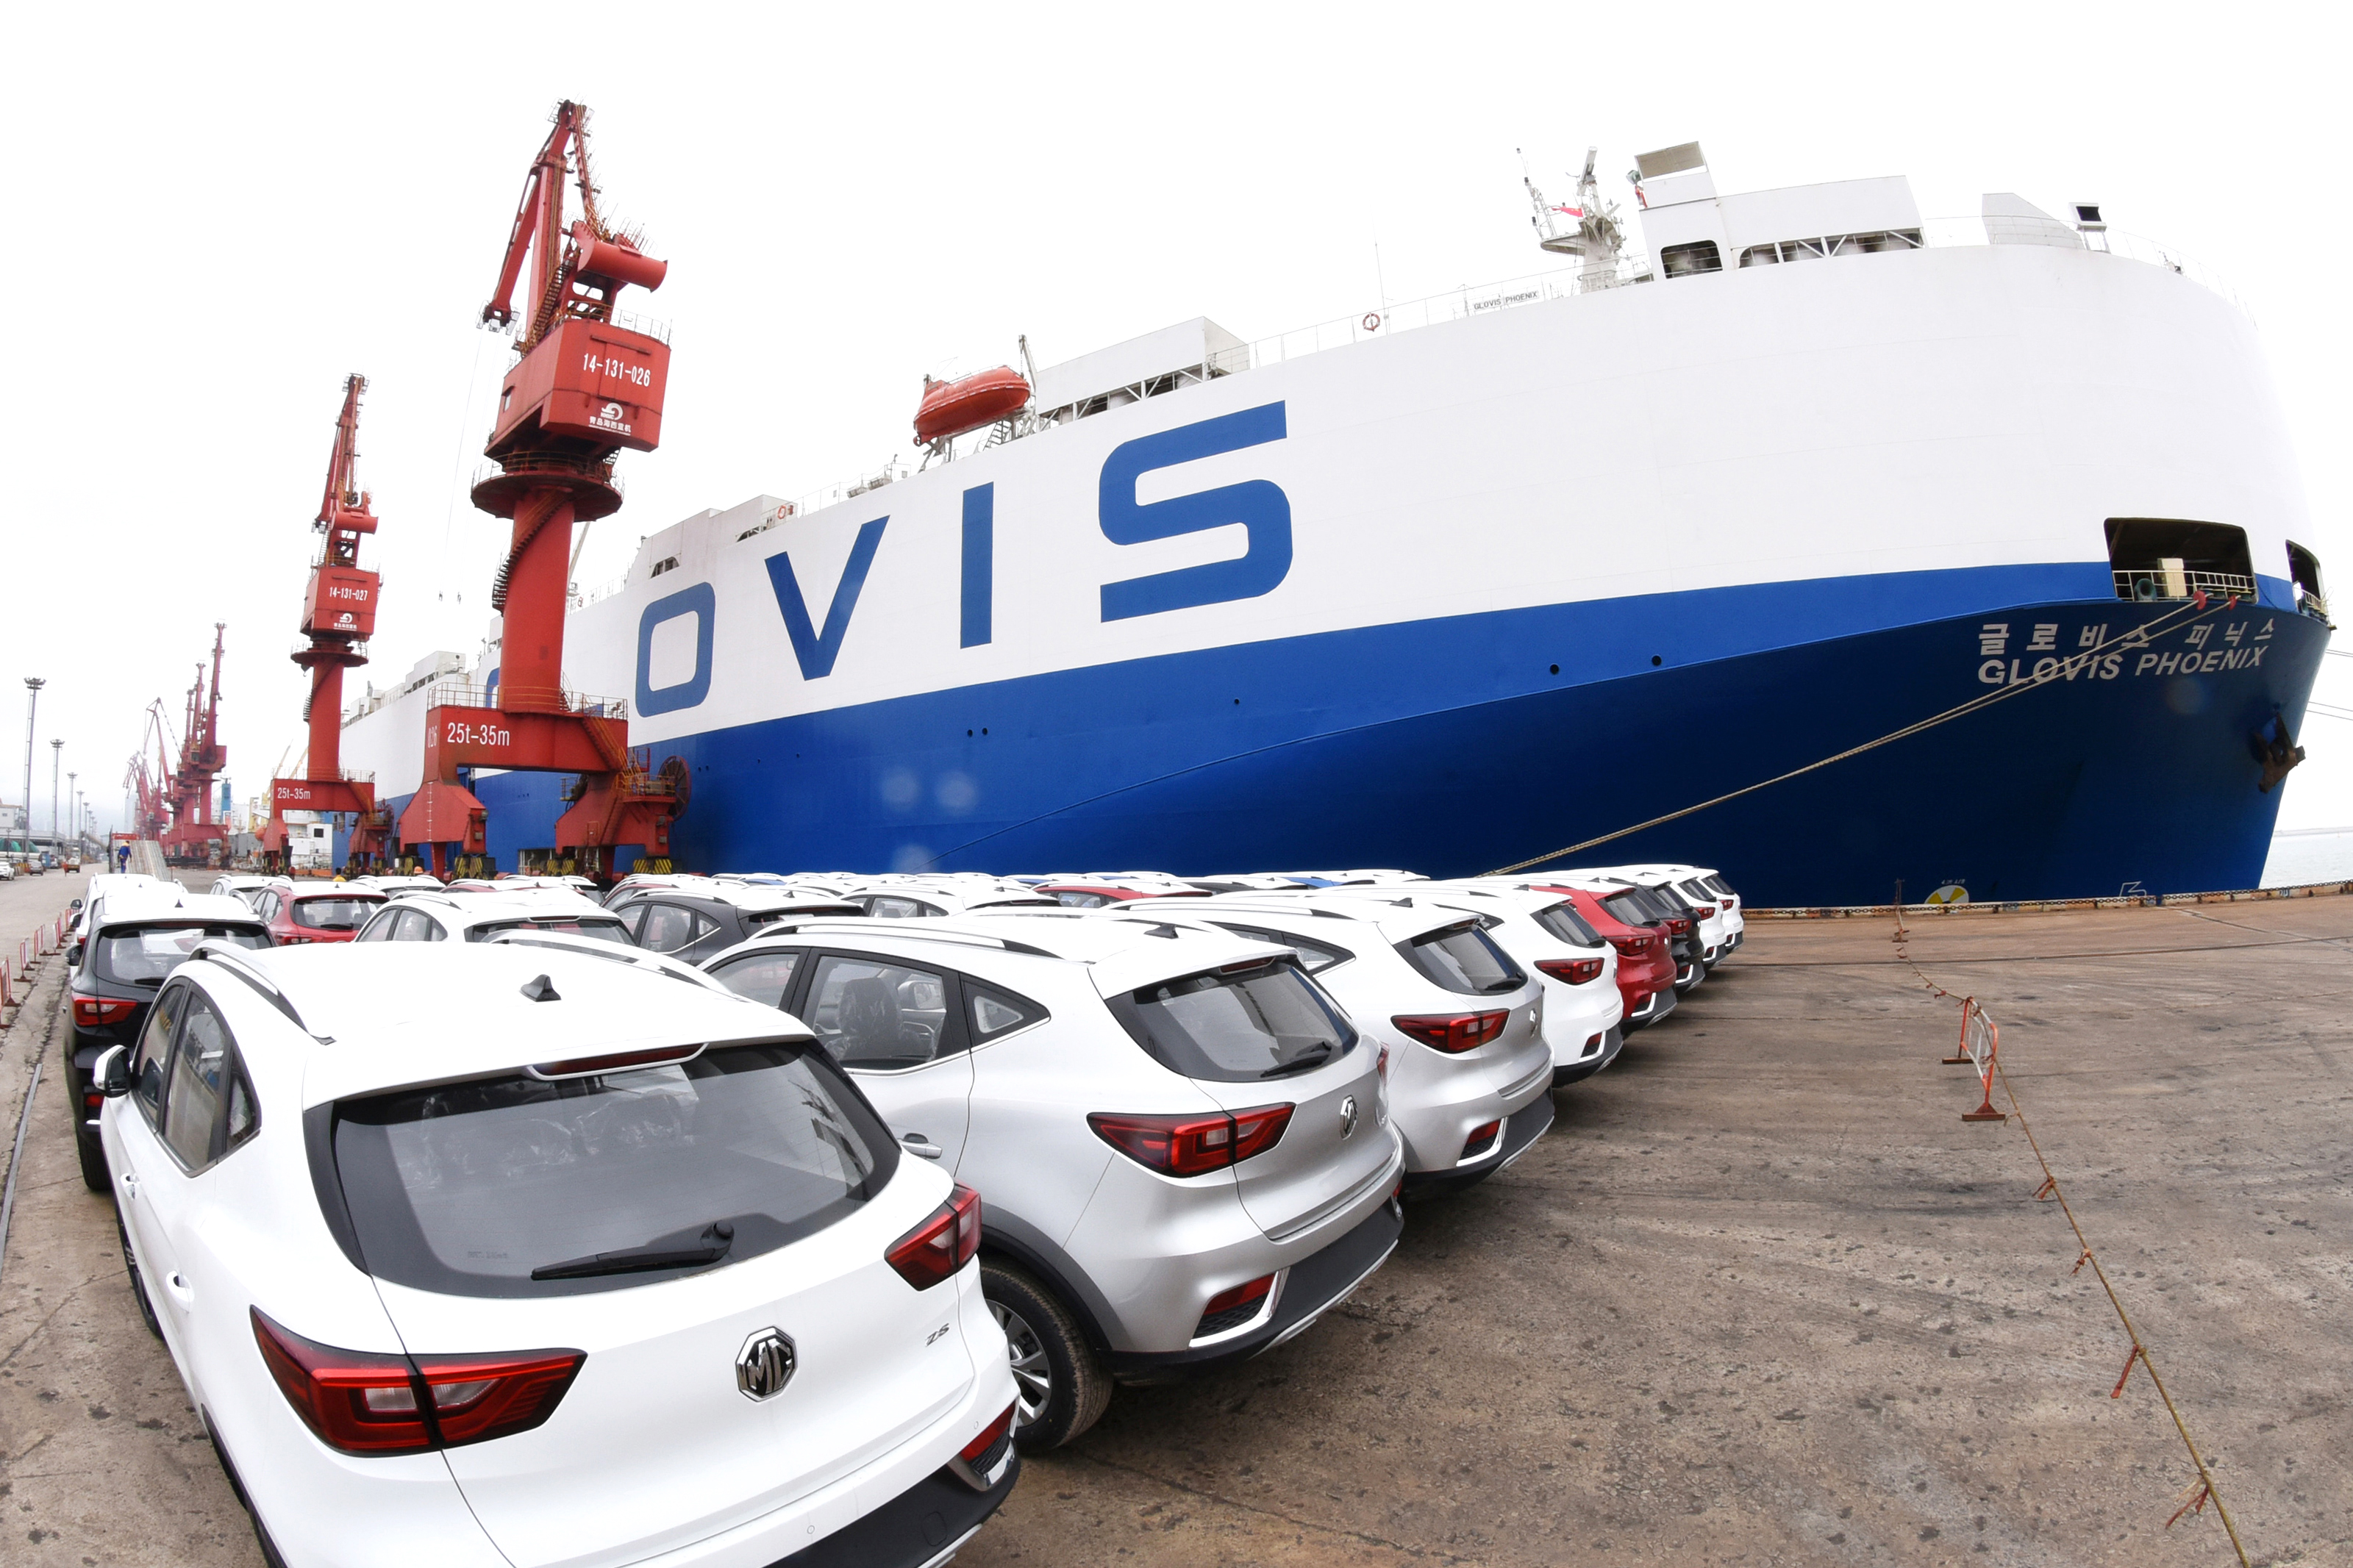 Cars awaiting export from China.